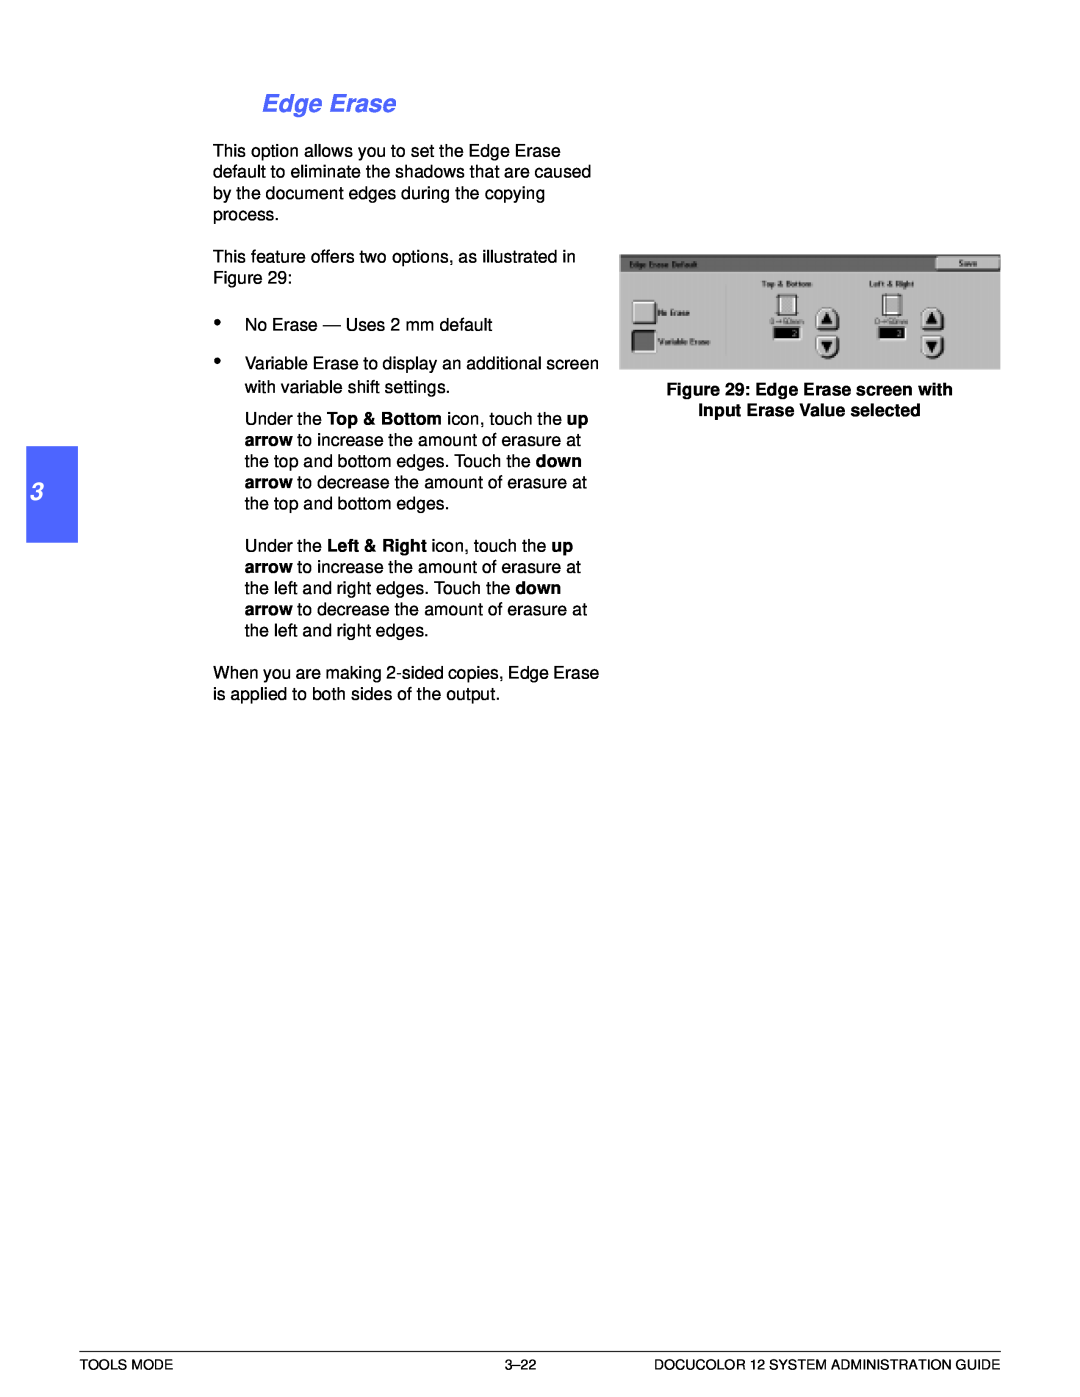 Xerox a2 manual 1 2 3 4 5 6 7, Edge Erase screen with, Input Erase Value selected 